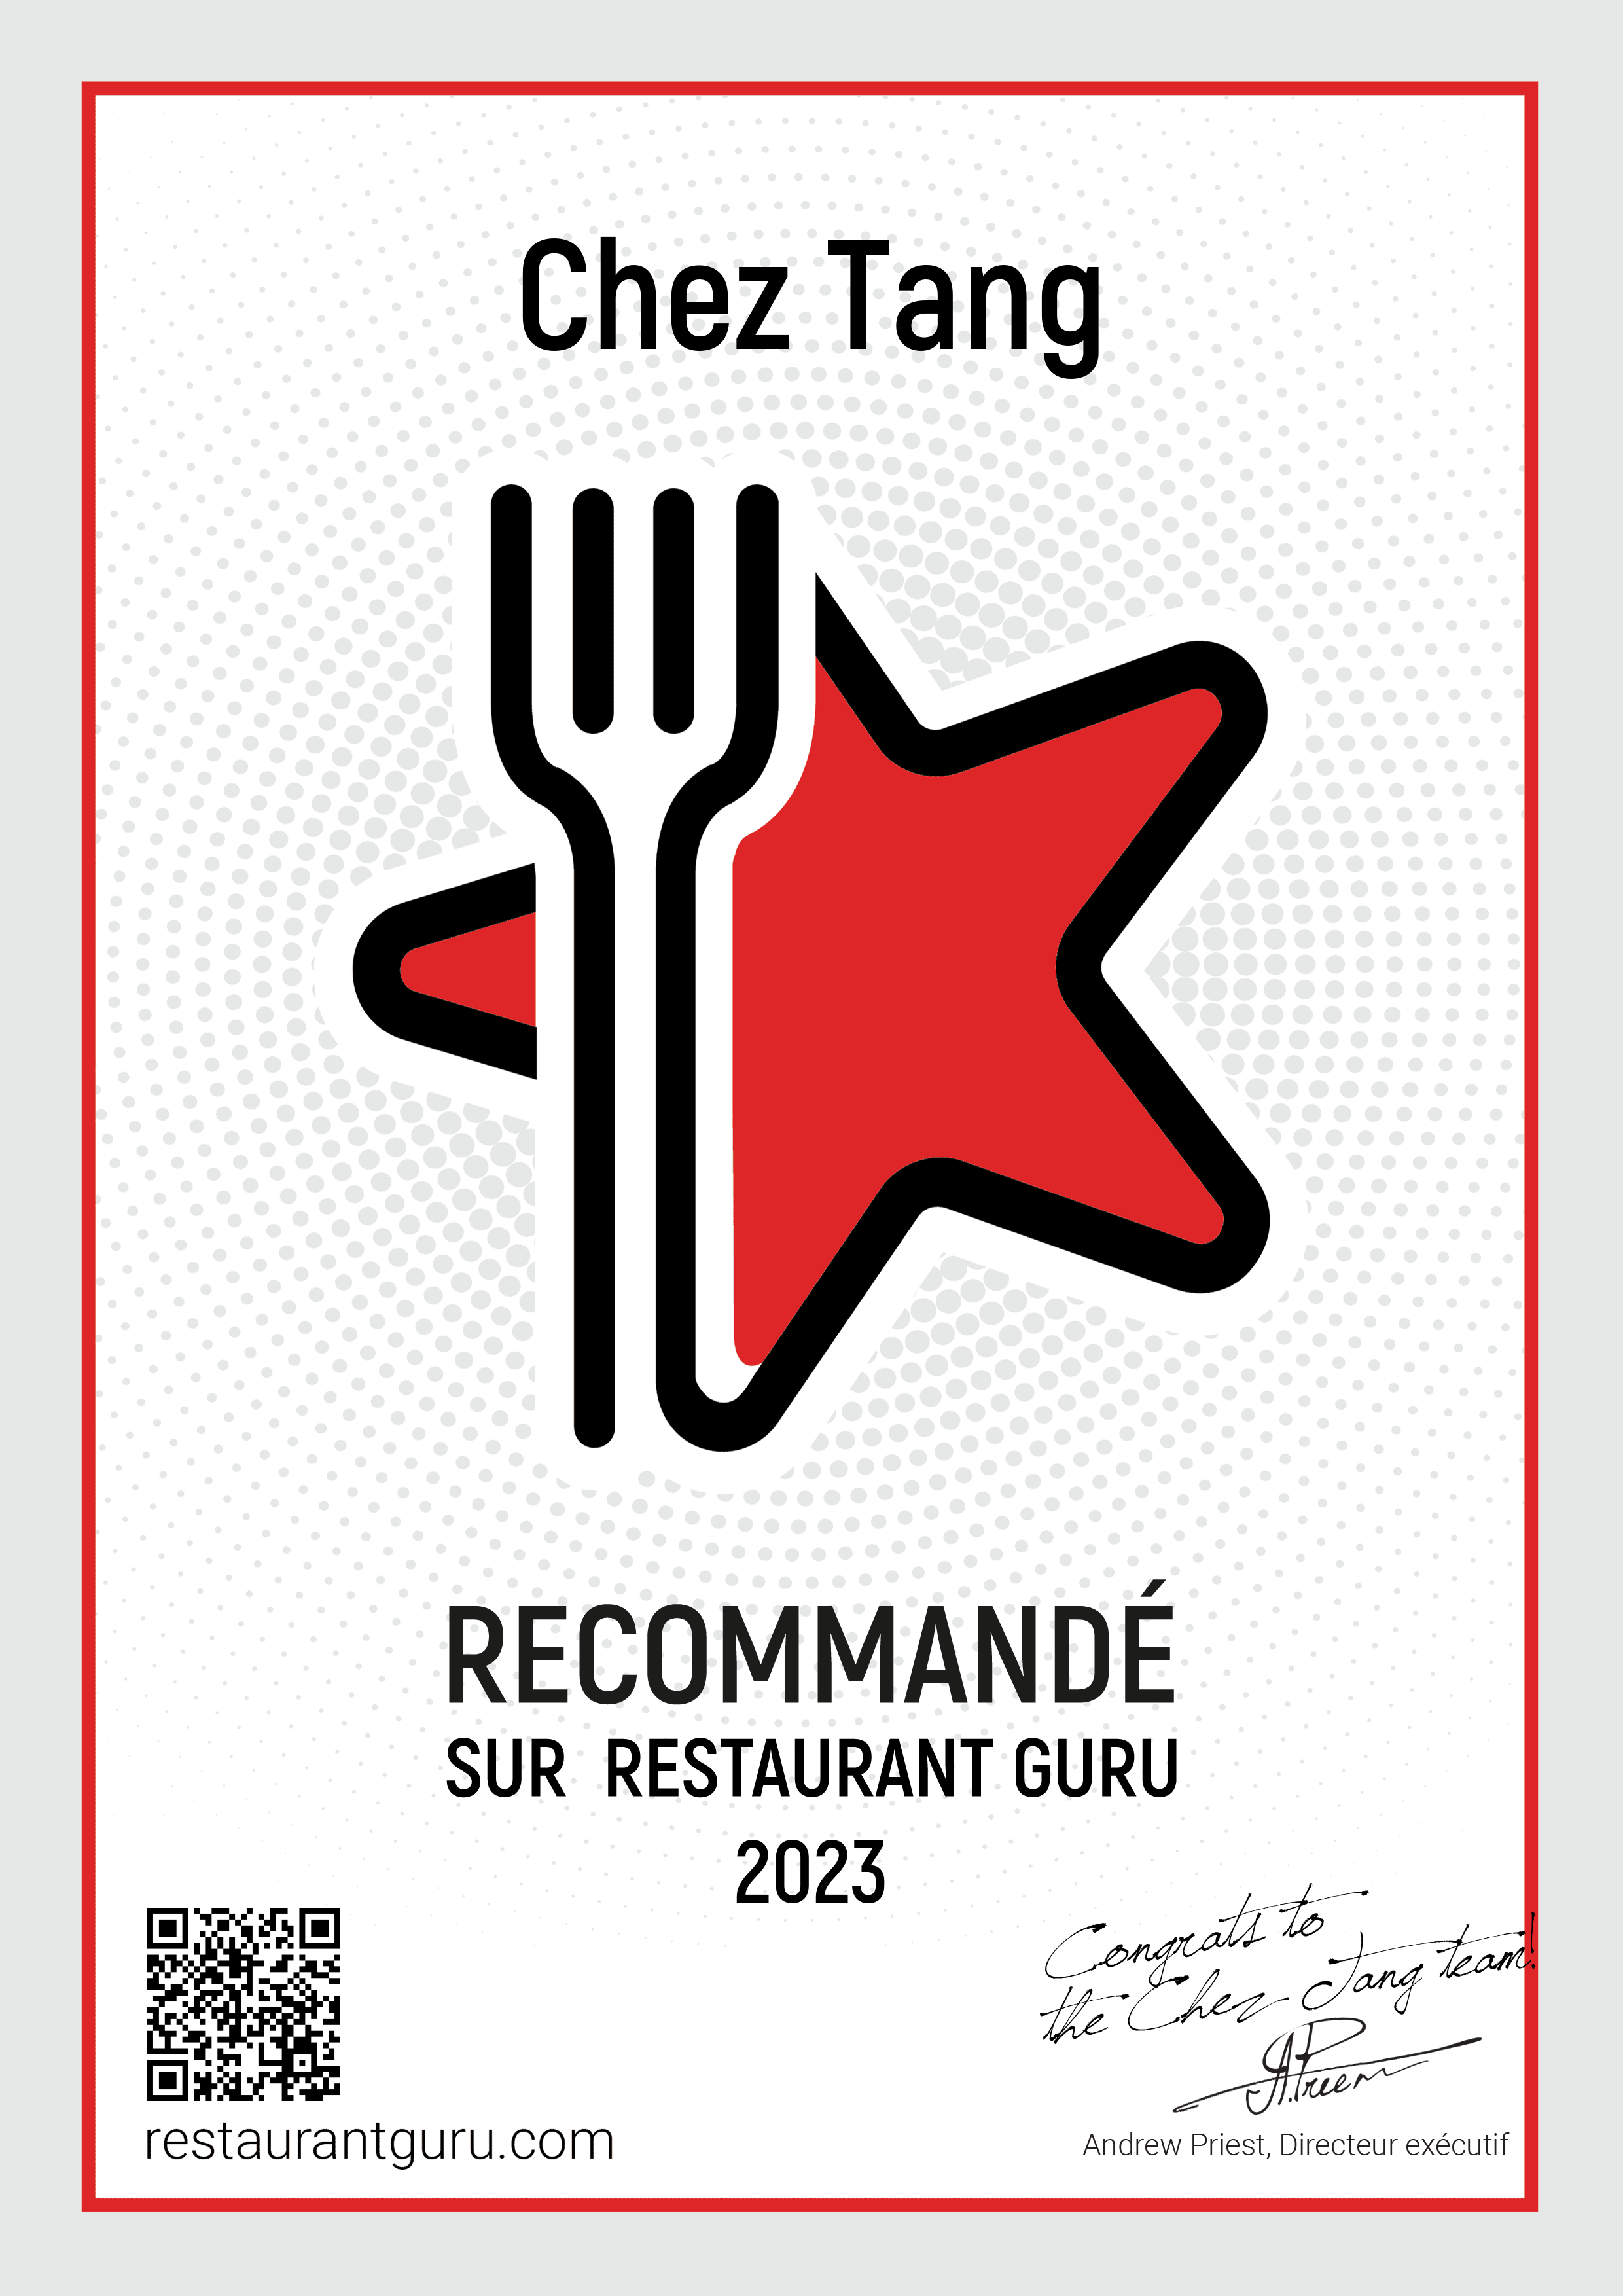 Restaurant Chez TANG : Établissement recommandé par Restaurant Guru en 2023